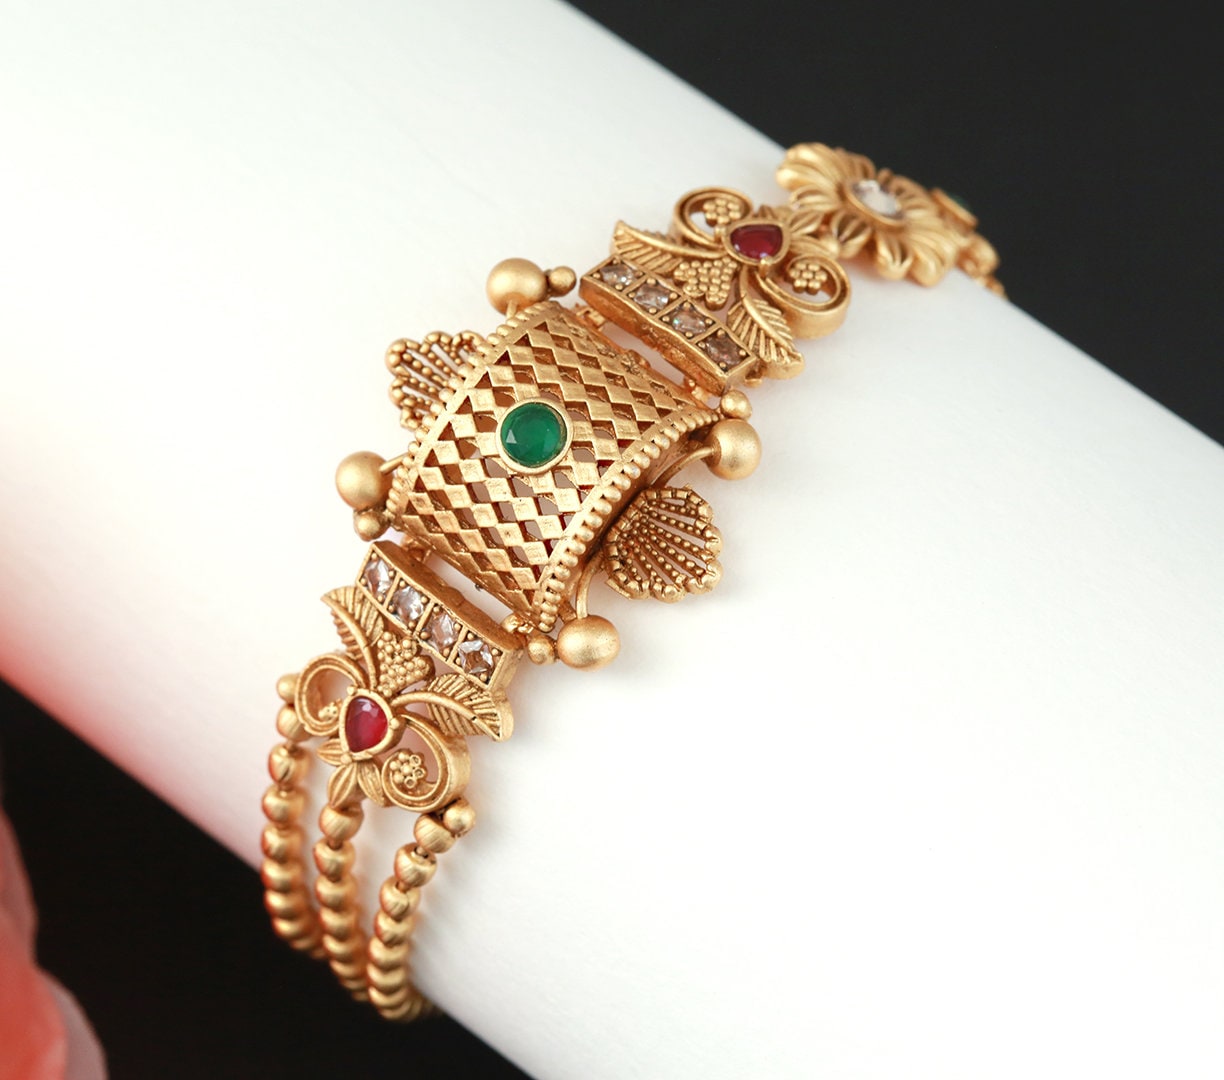 Bracelet | Gold bracelet for girl, Bracelet designs, Gold jewellery design